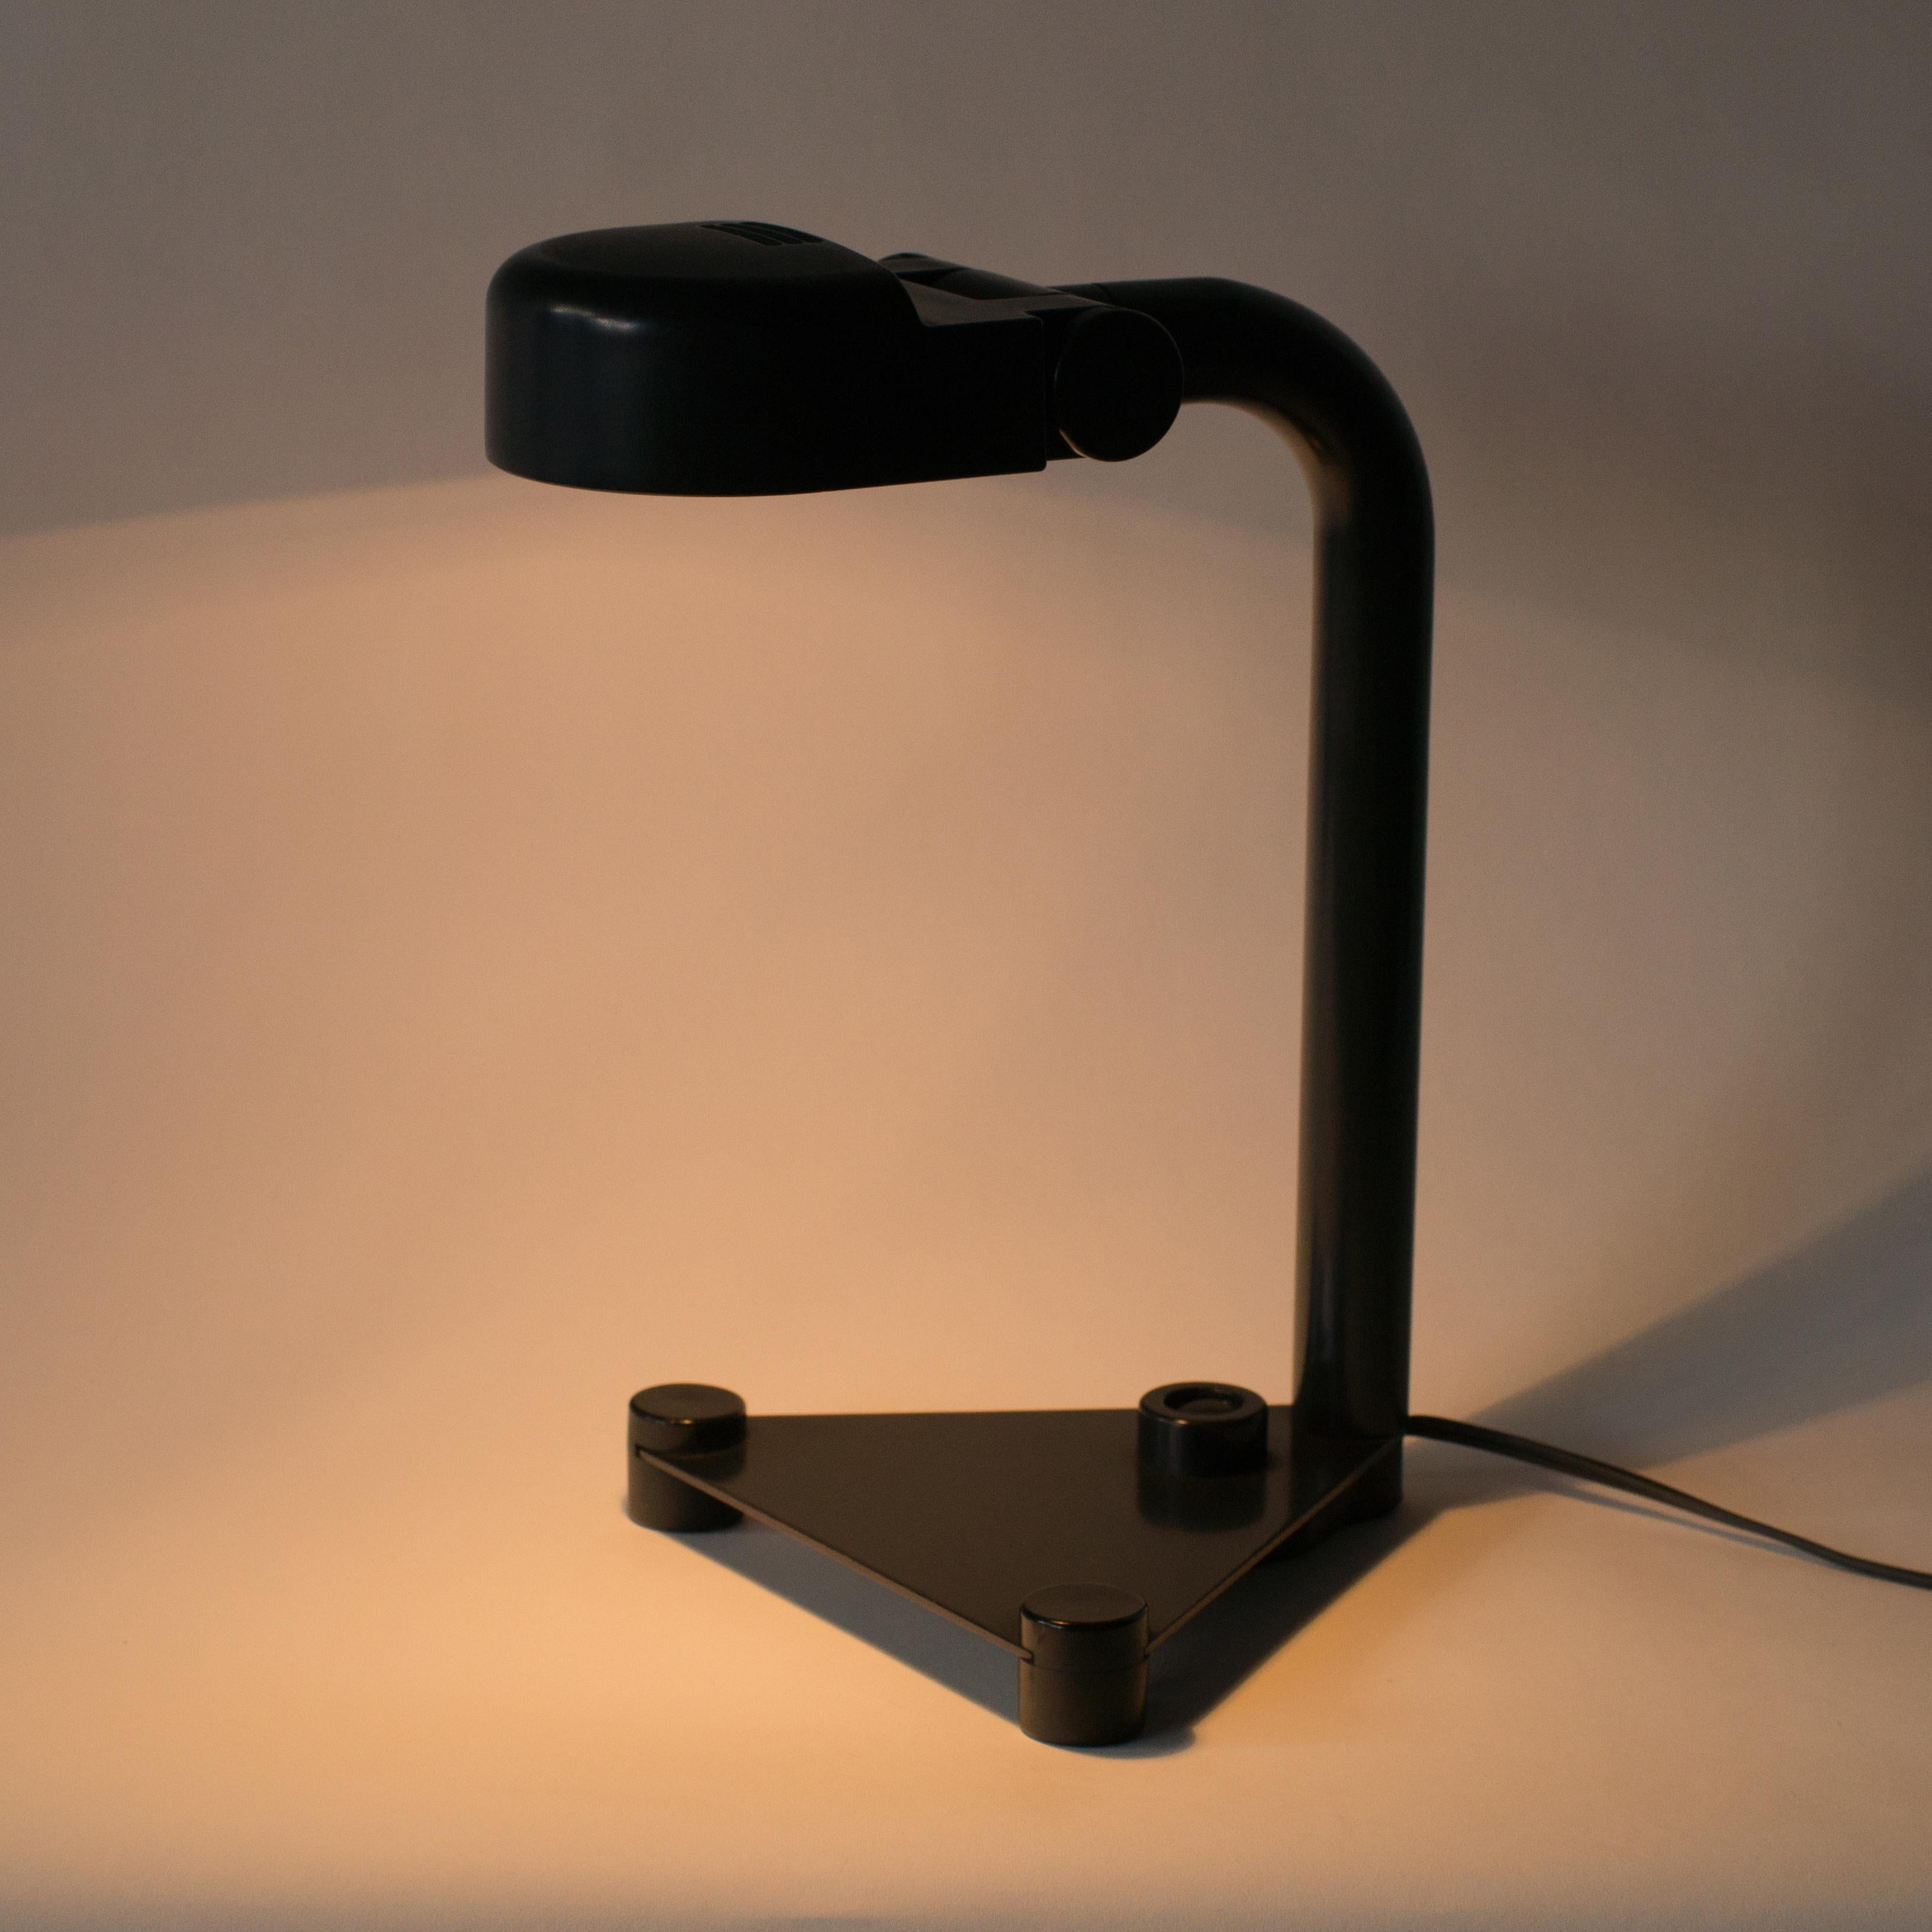 Desk lamp designed by Masayuki Kurokawa for Yamagiwa. Made of steel.
E17 bulb. Black color model. 
 
 